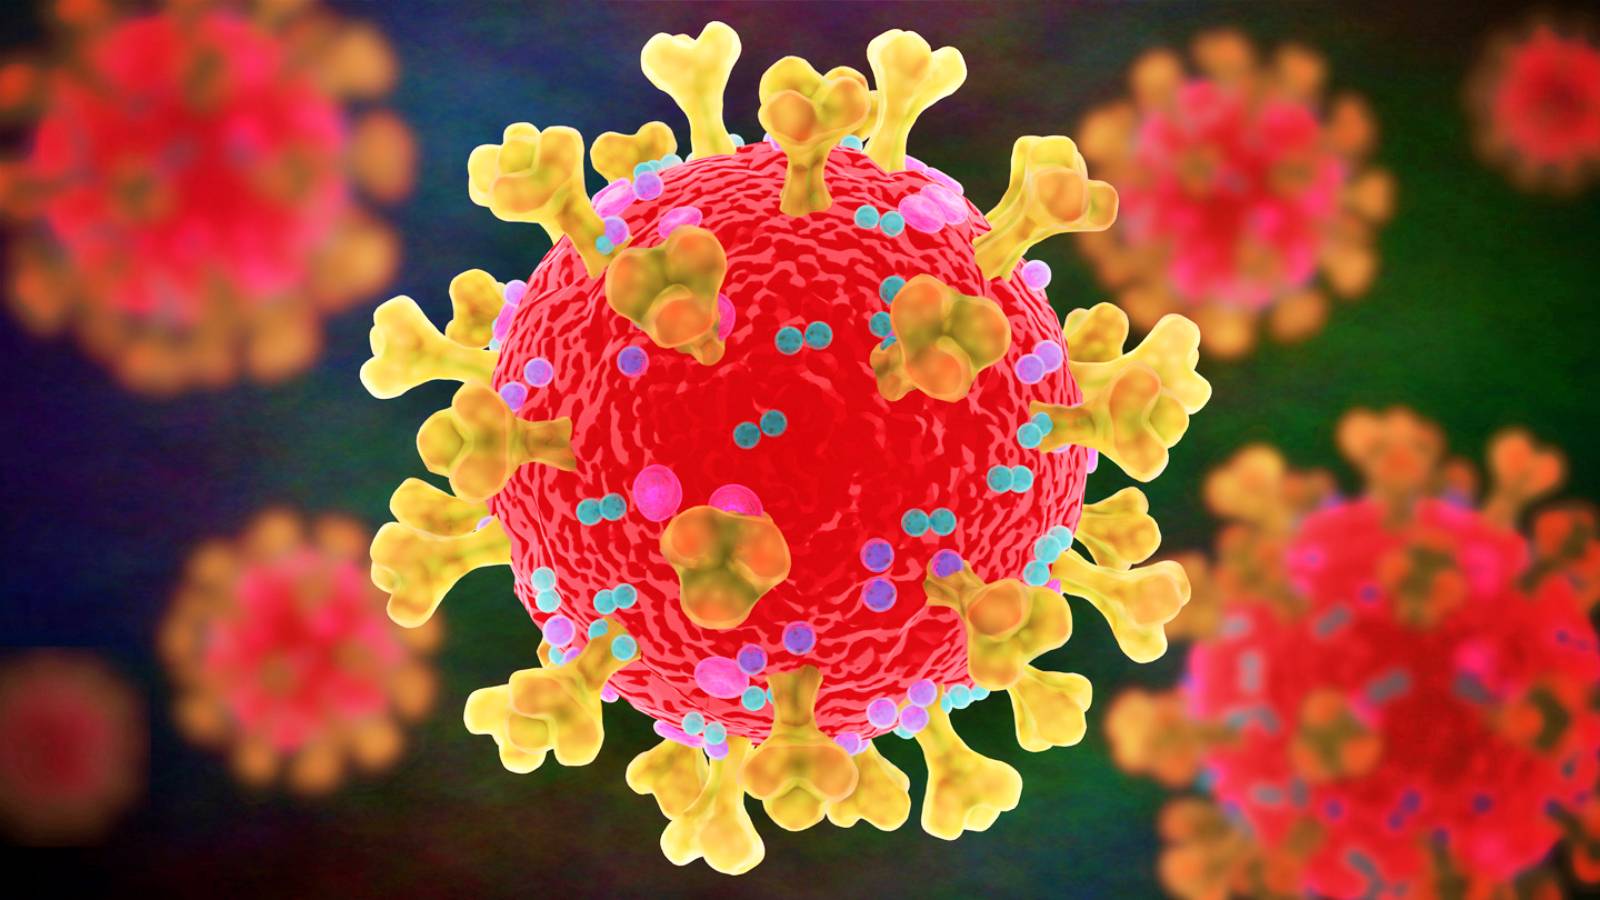 Coronavirus Romania Large Number of New Cases on August 16, 2021